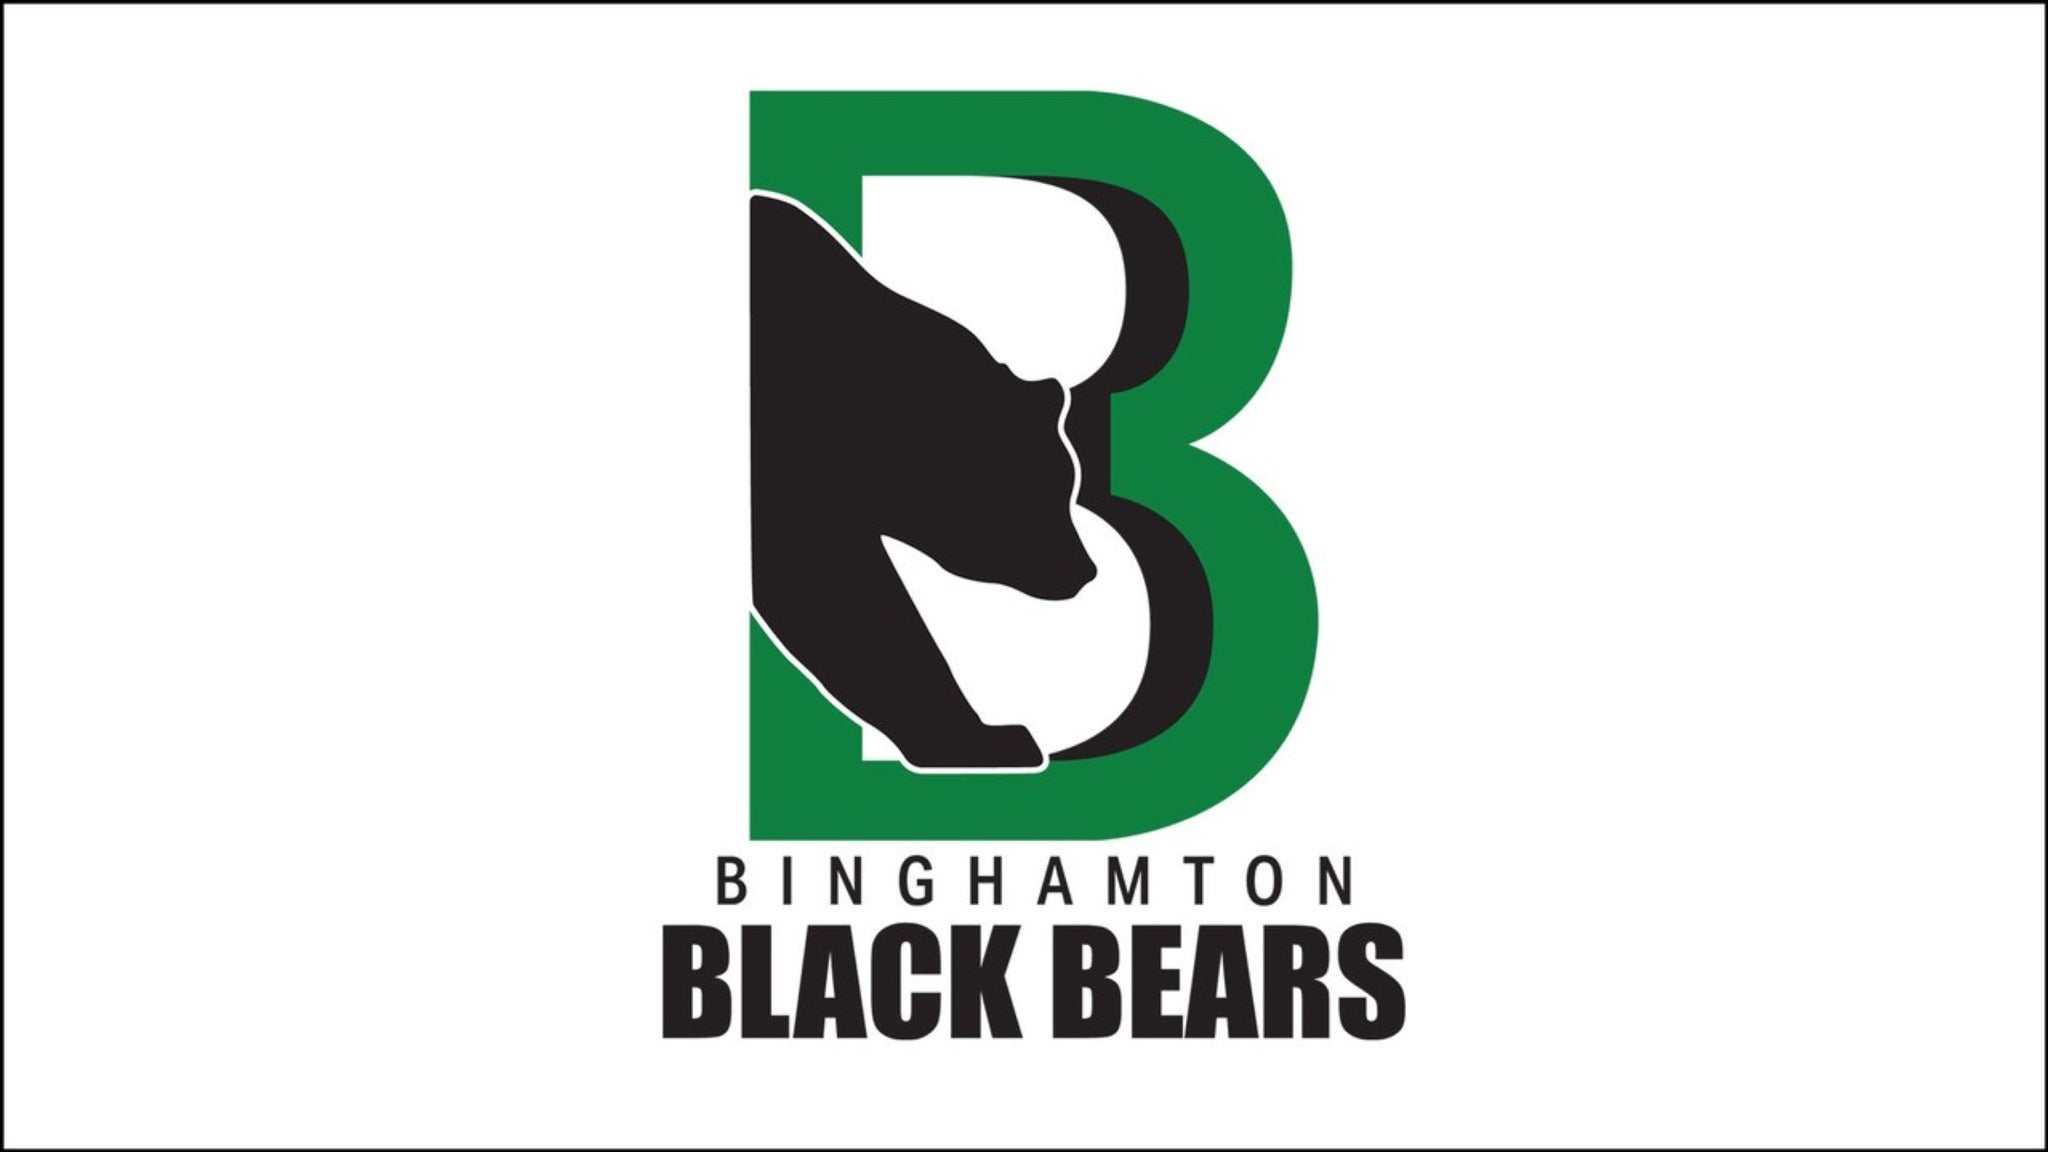 Binghamton Black Bears vs. Danbury Hat Tricks